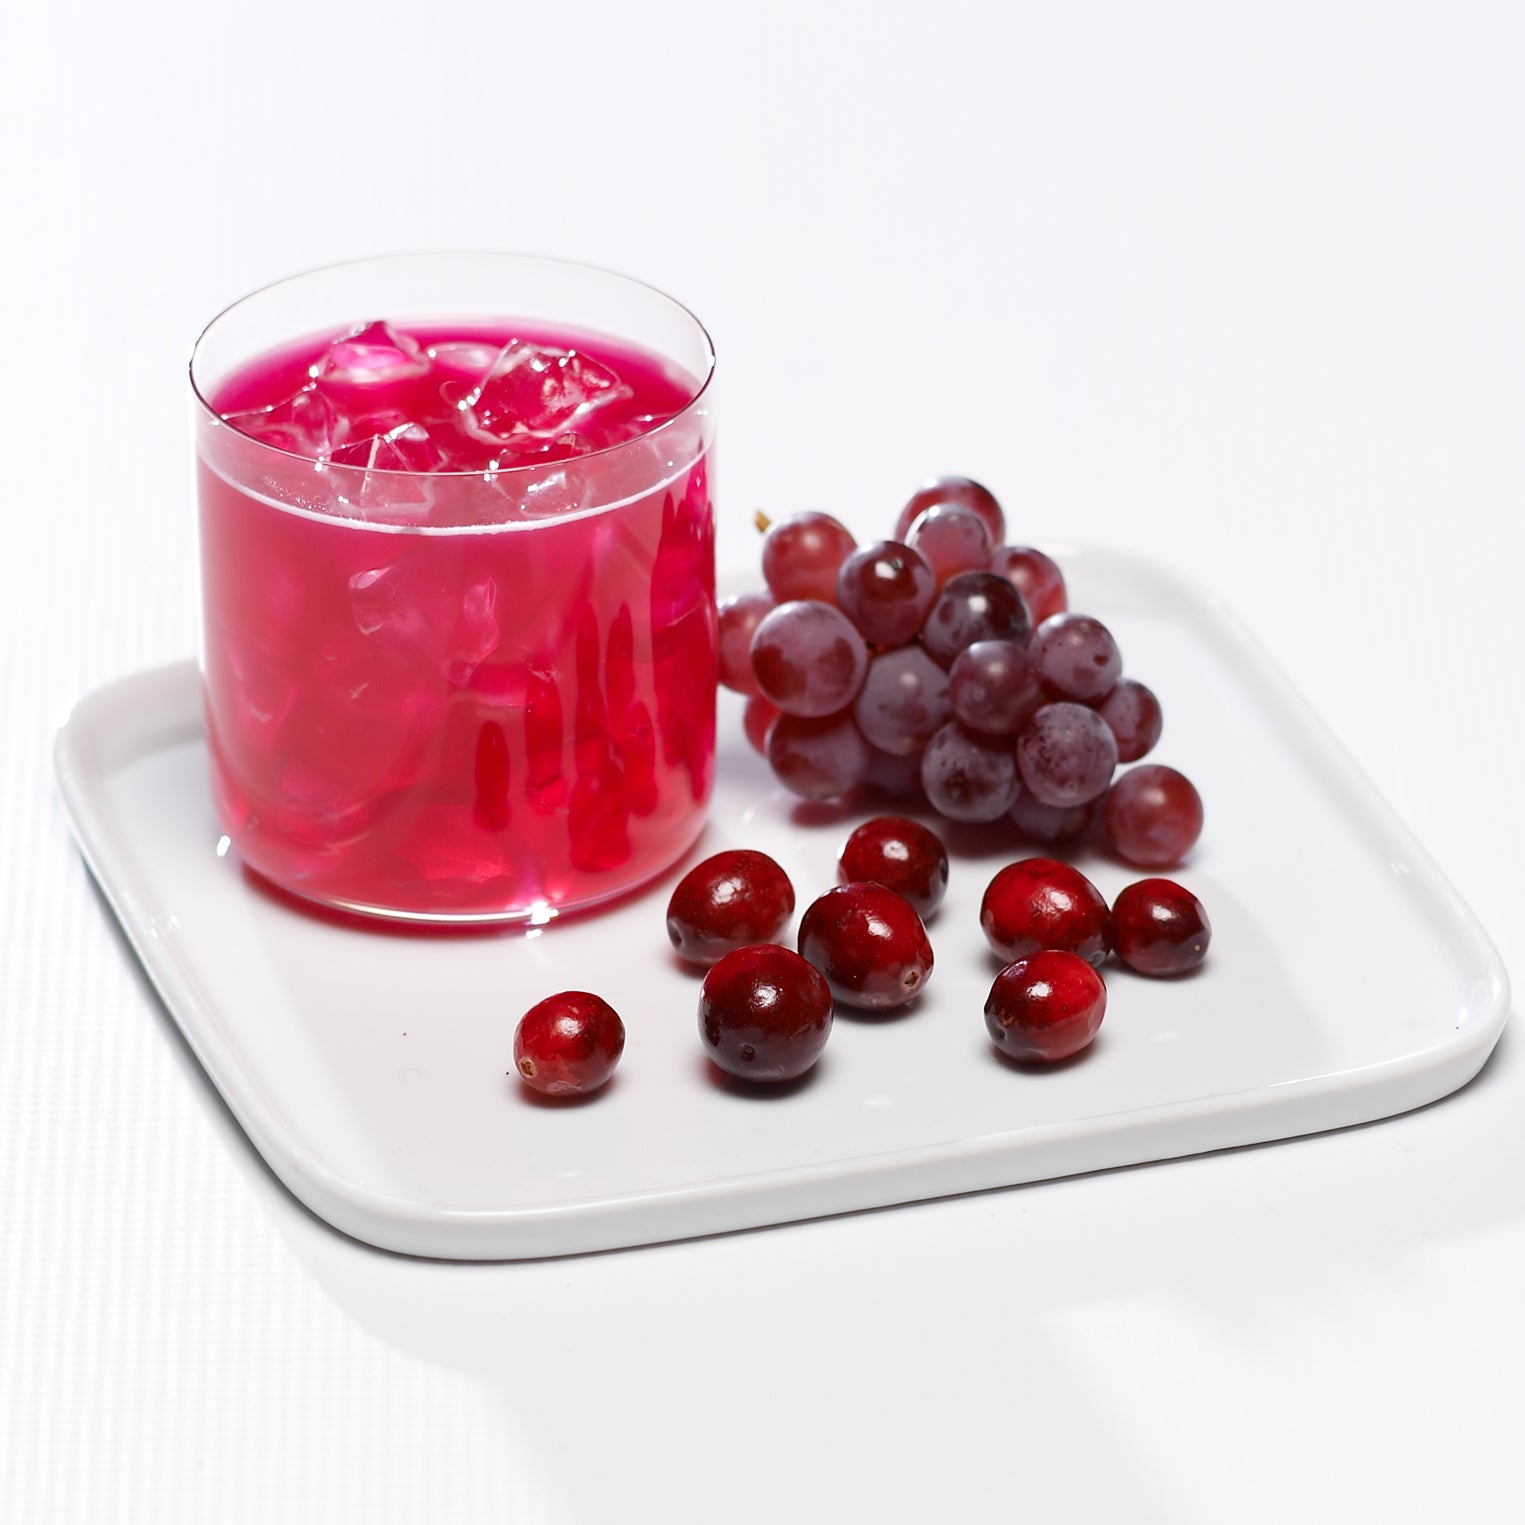 Nutri-15 drink mix – cran-grape